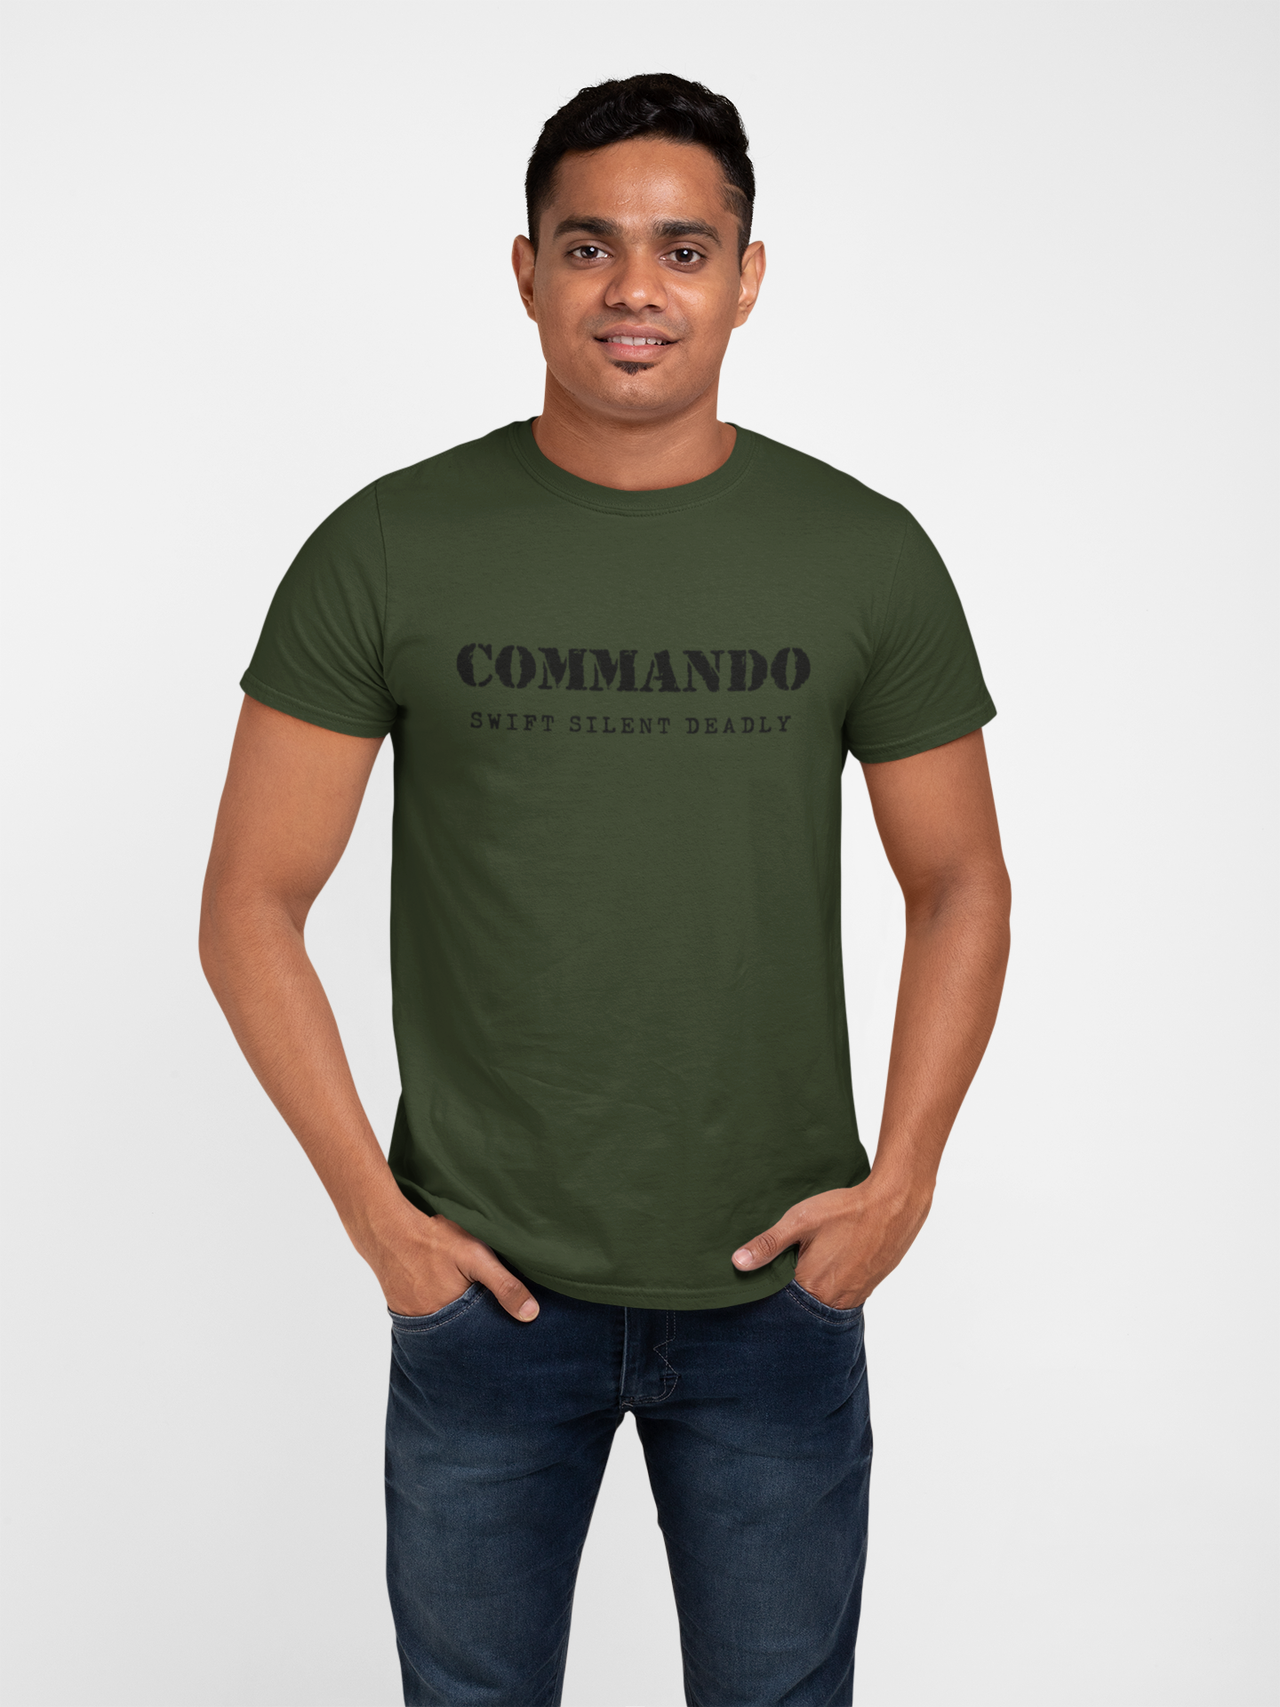 Commando T-shirt - Commando - Swift Silent Deadly (Men)